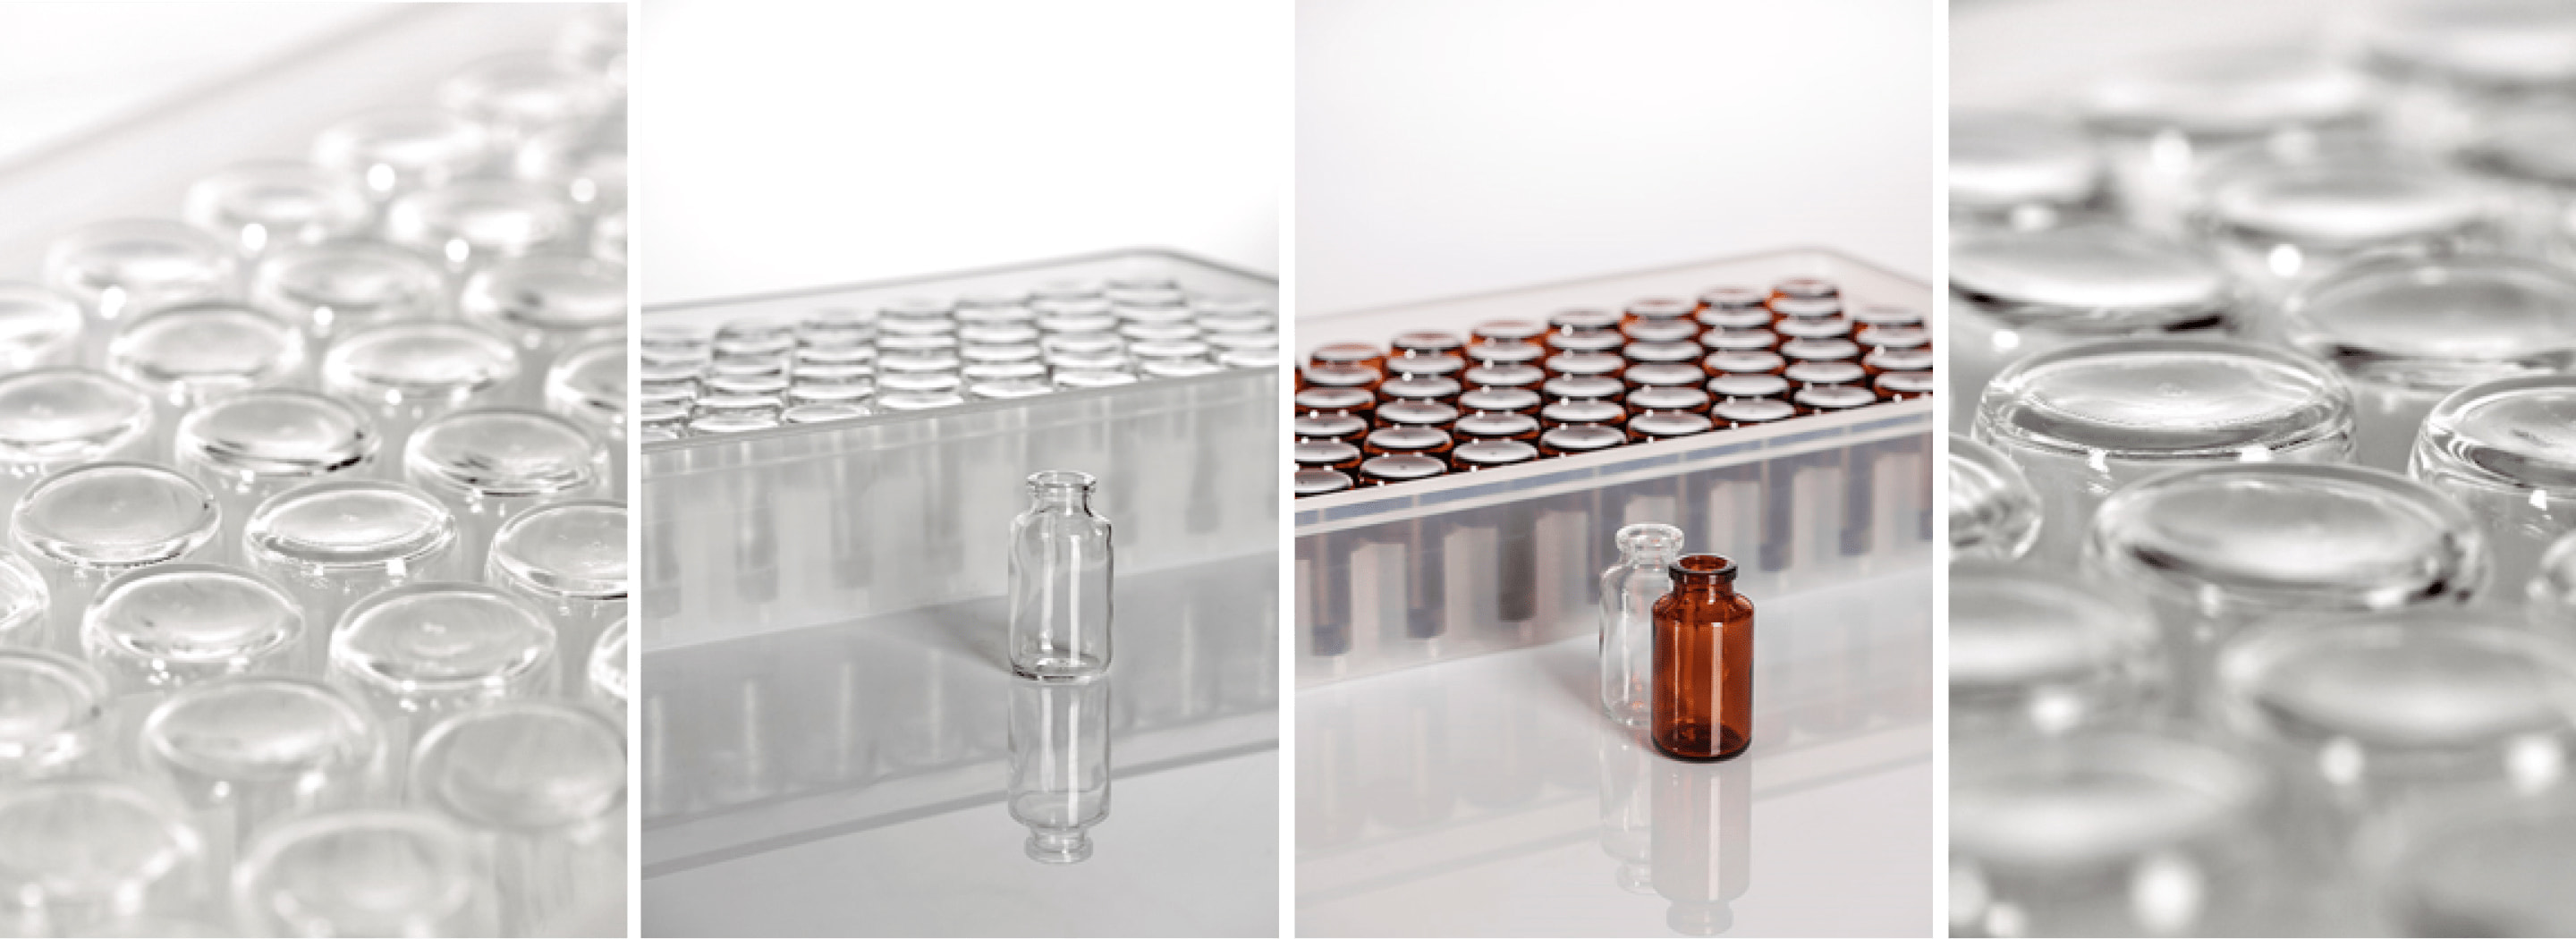 Type I molded glass vials